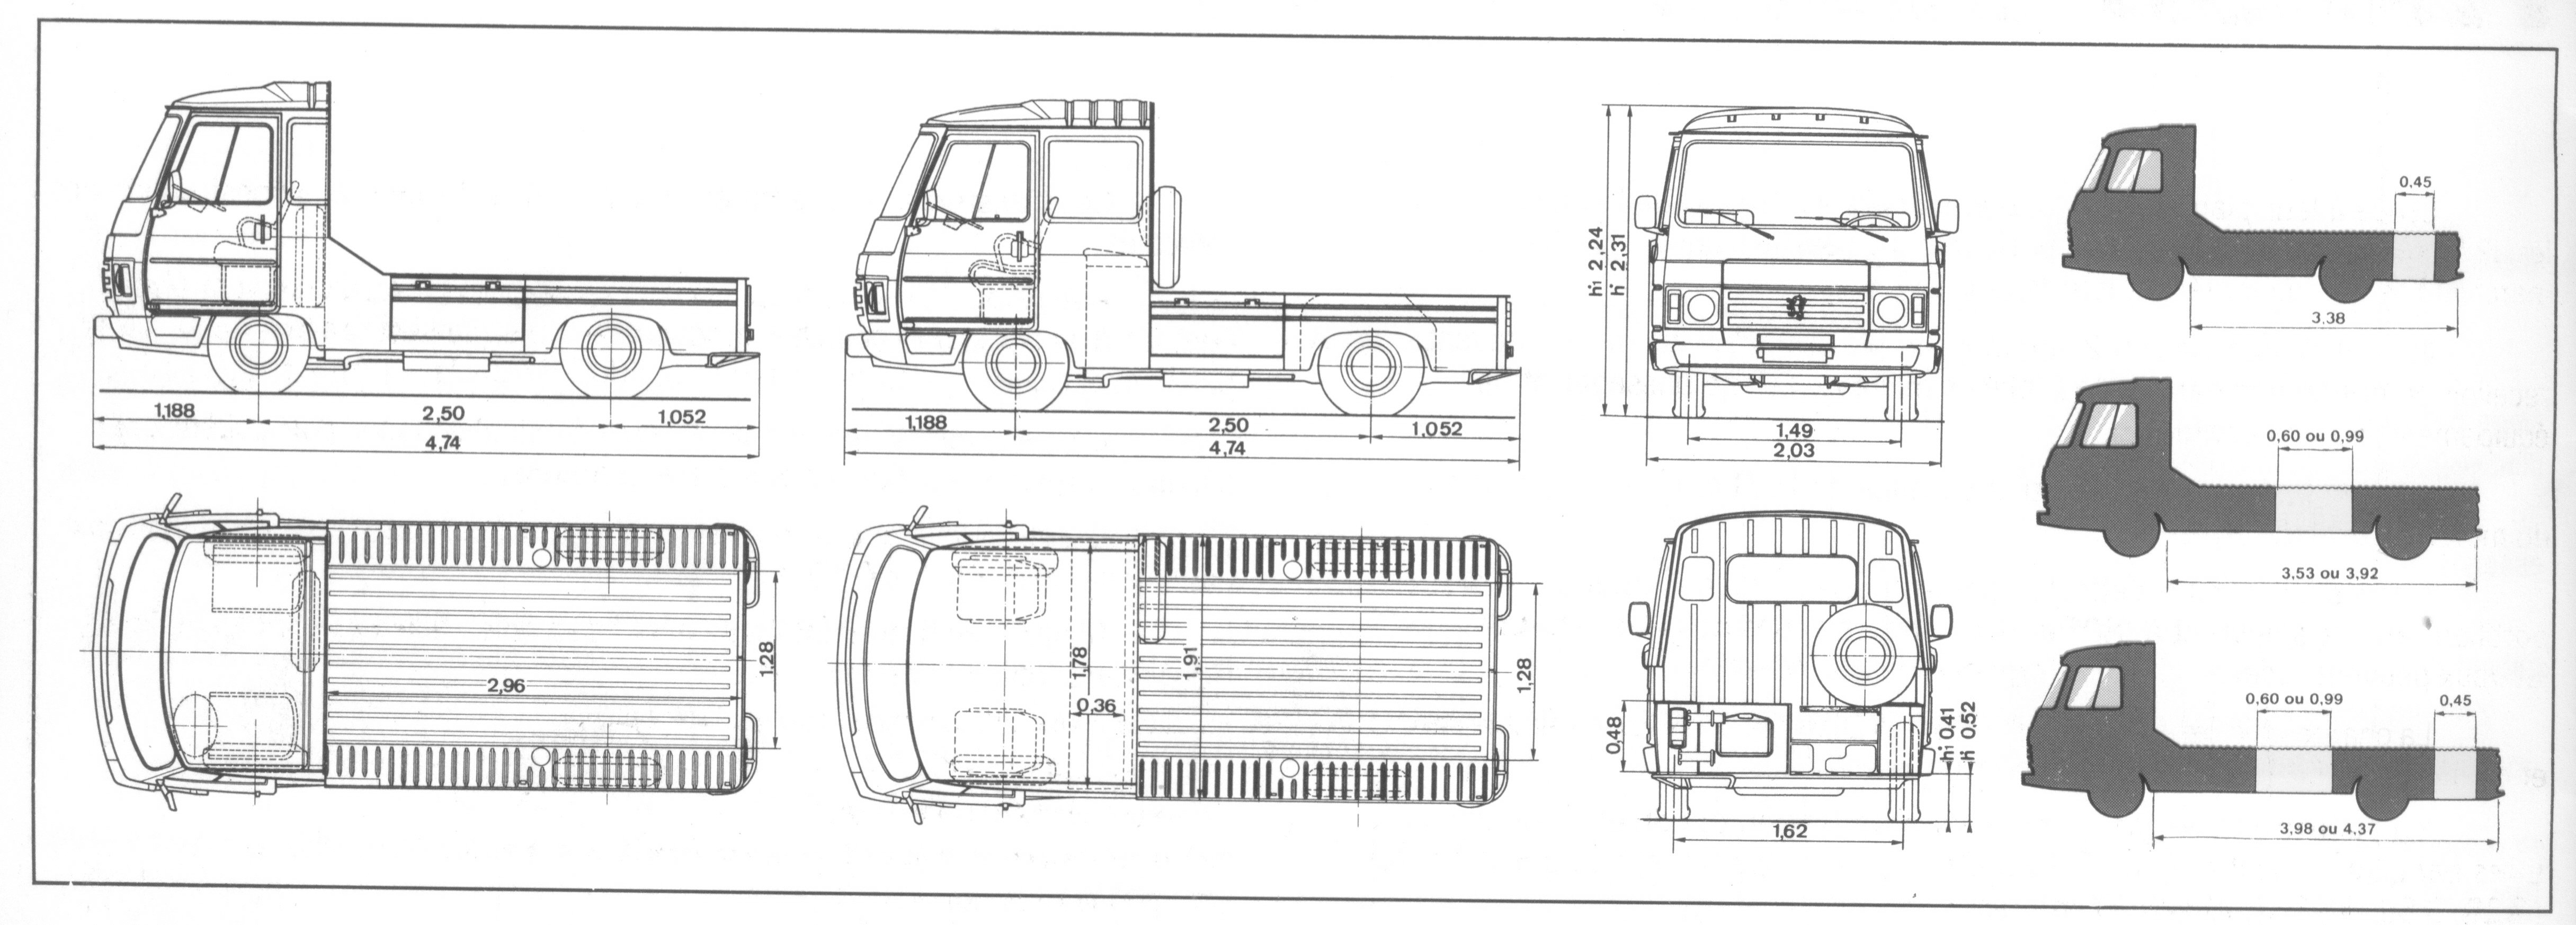 Peugeot J9 blueprint